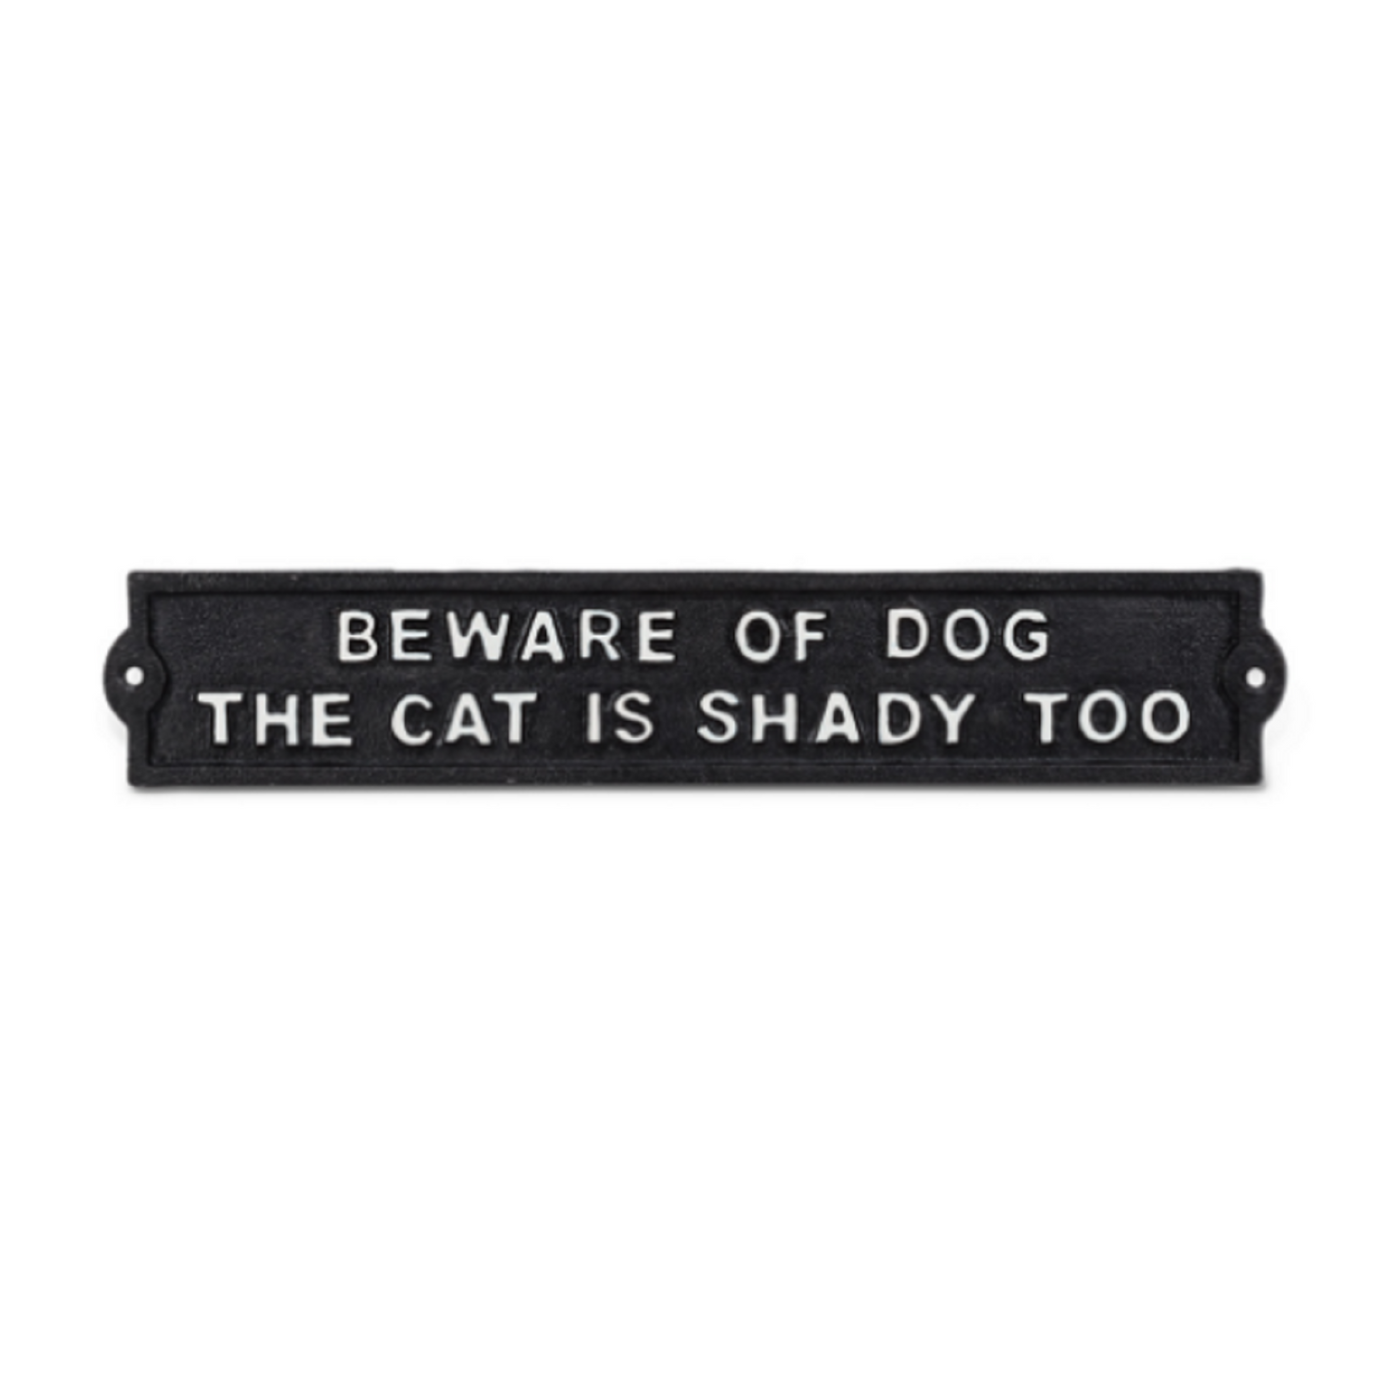 Beware of dog (sign)